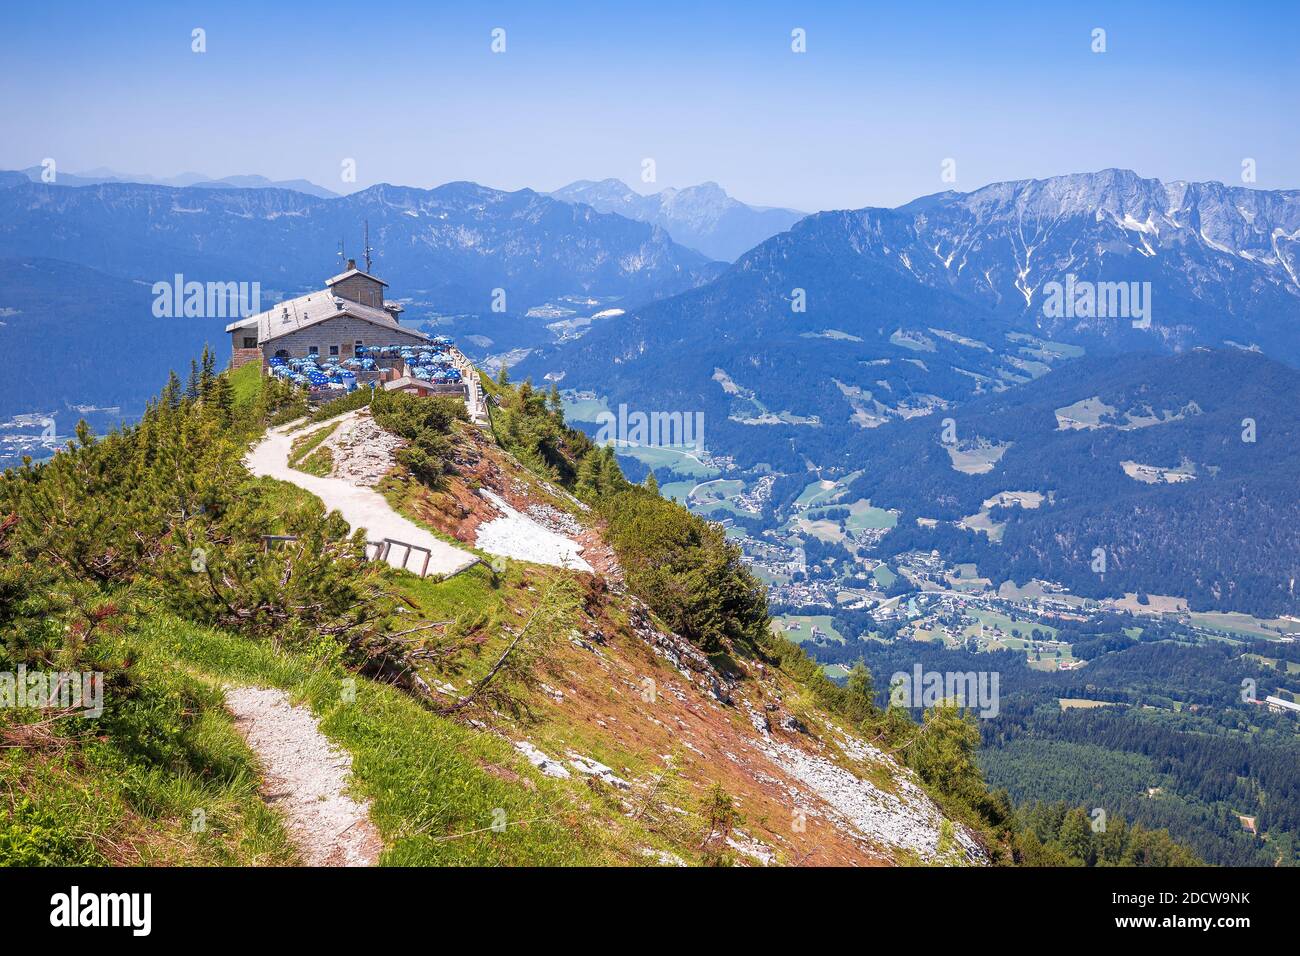 Eagle's Nest or Kehlsteinhaus hideout on the rock above Alpine landscape view, Berchtesgadener Land, Bavaria, Germany Stock Photo